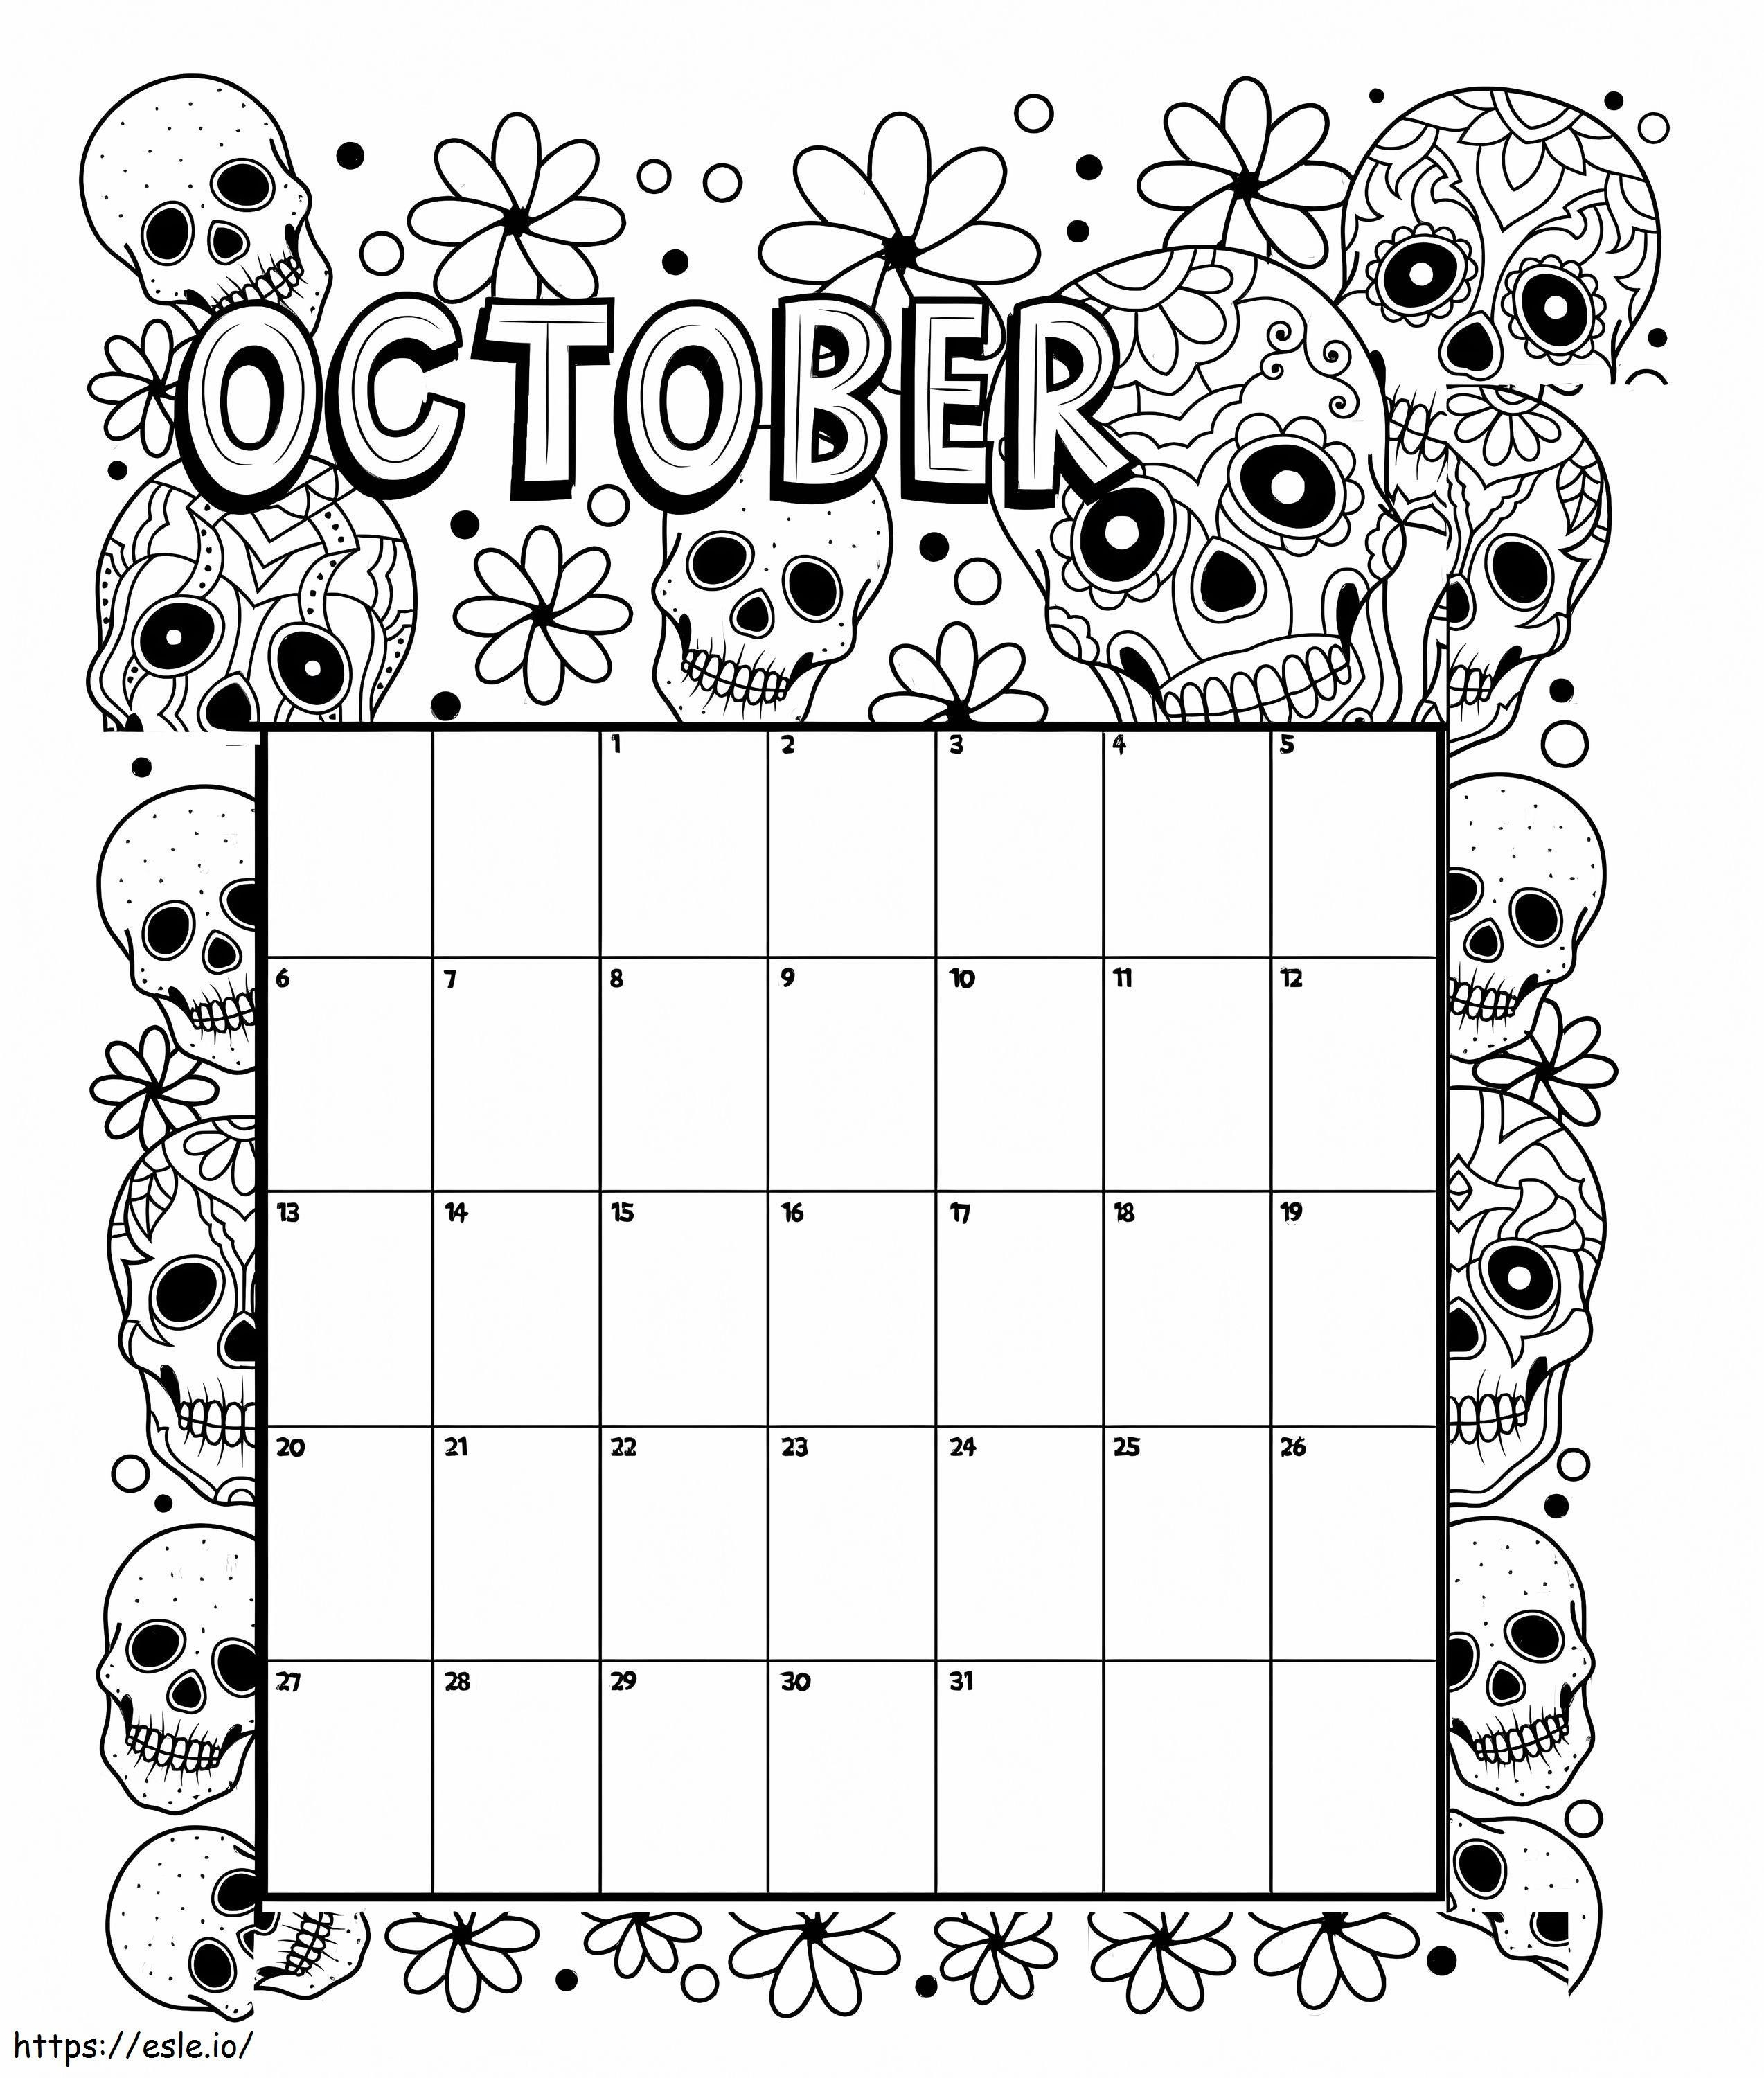 Oktober-Halloween-Kalender ausmalbilder